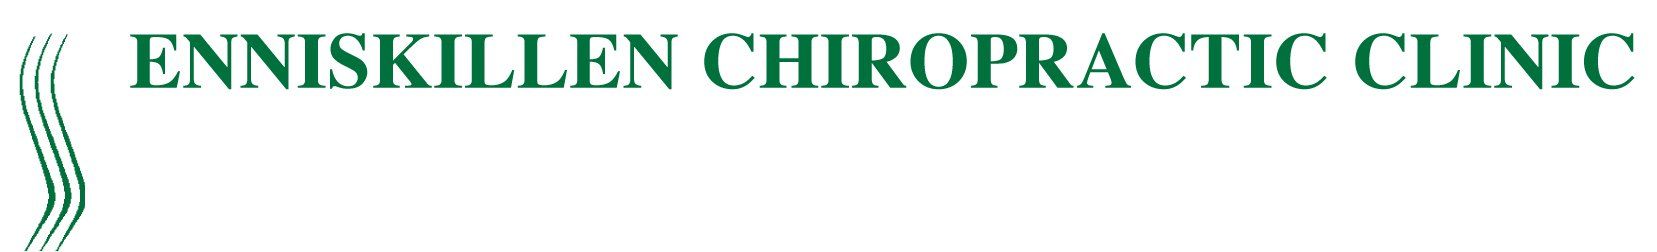 Enniskillen Chiropractic Clinic